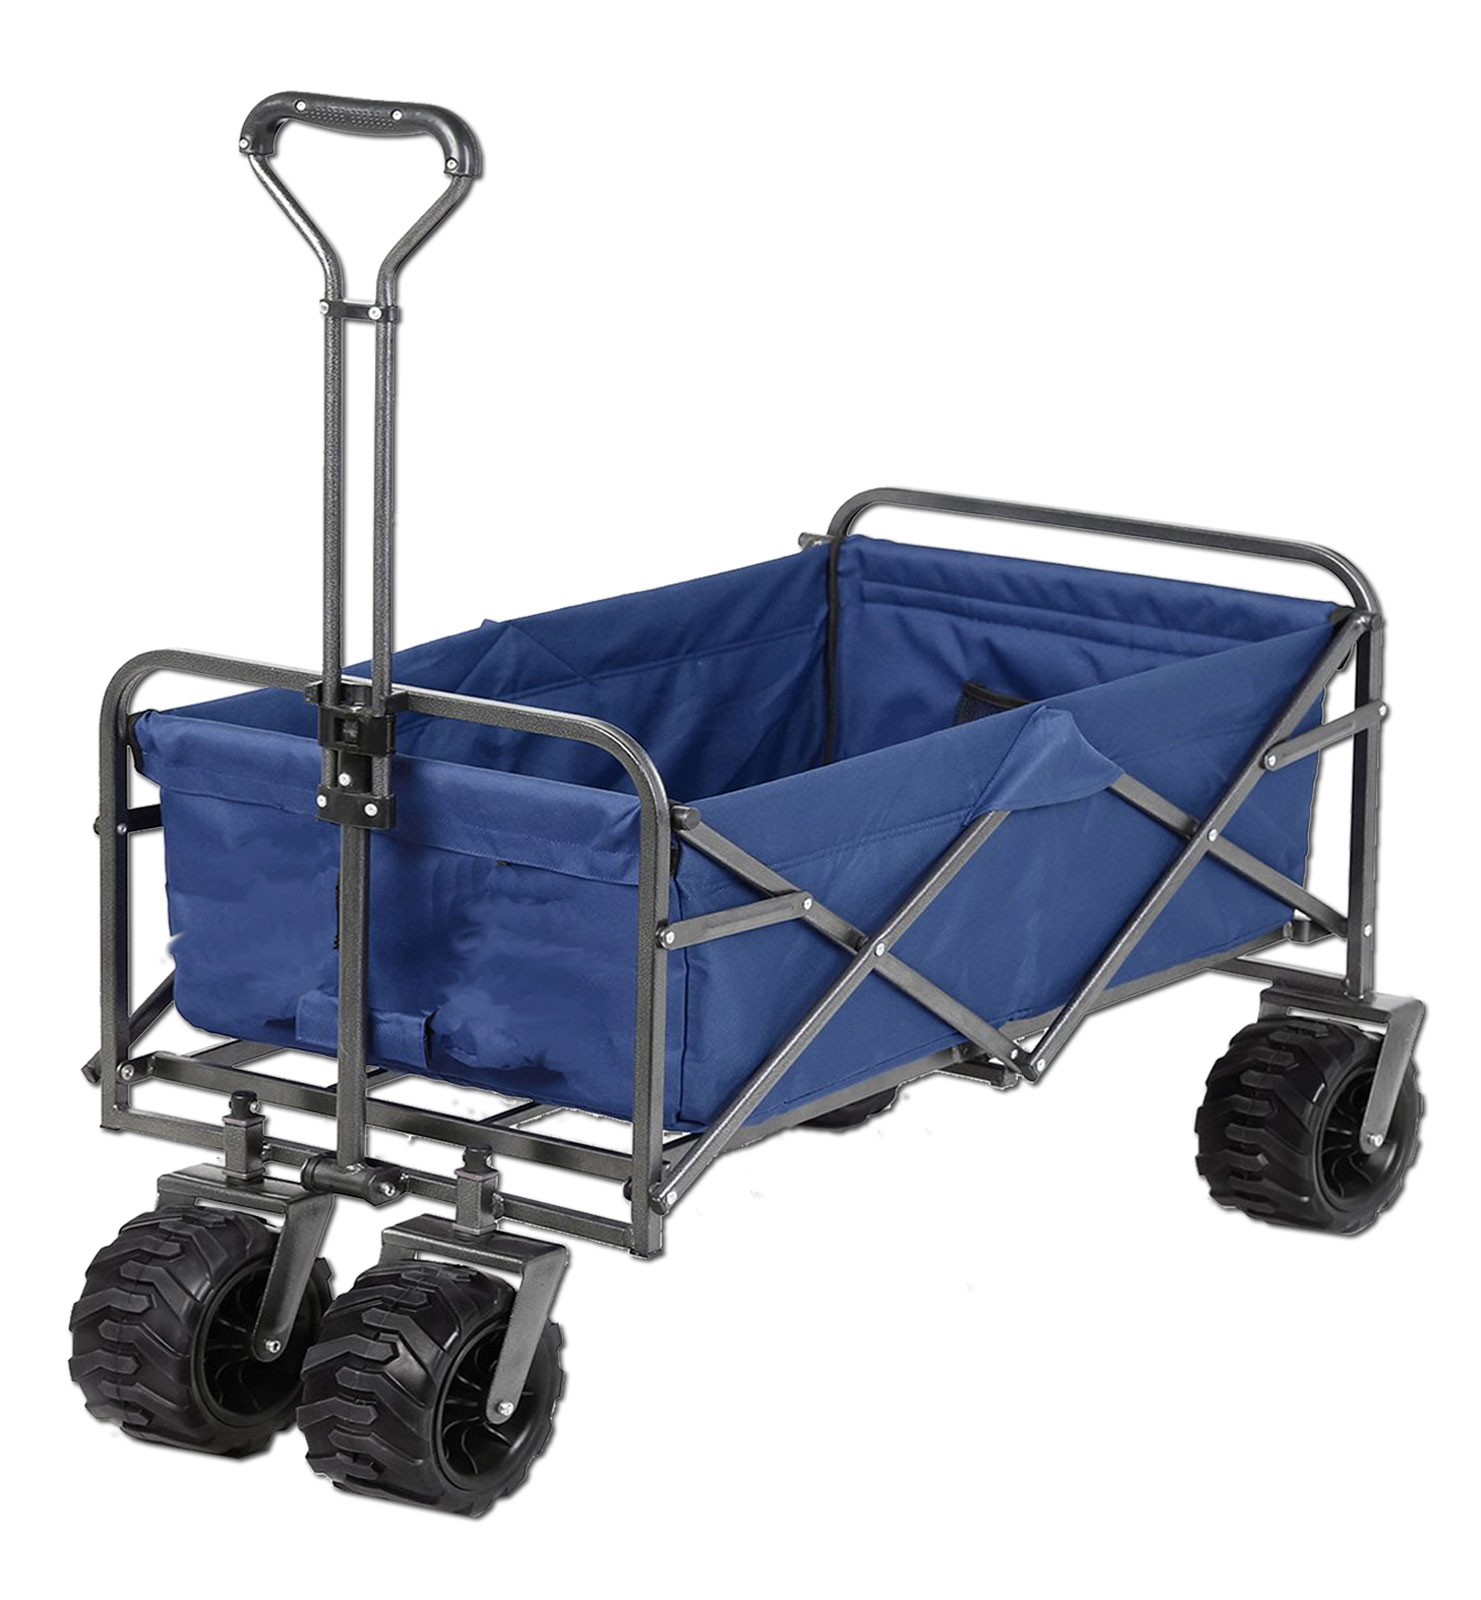 Black Outdoor Innovations Heavy Duty Collapsible All Terrain Folding Beach Wagon Utility Cart 